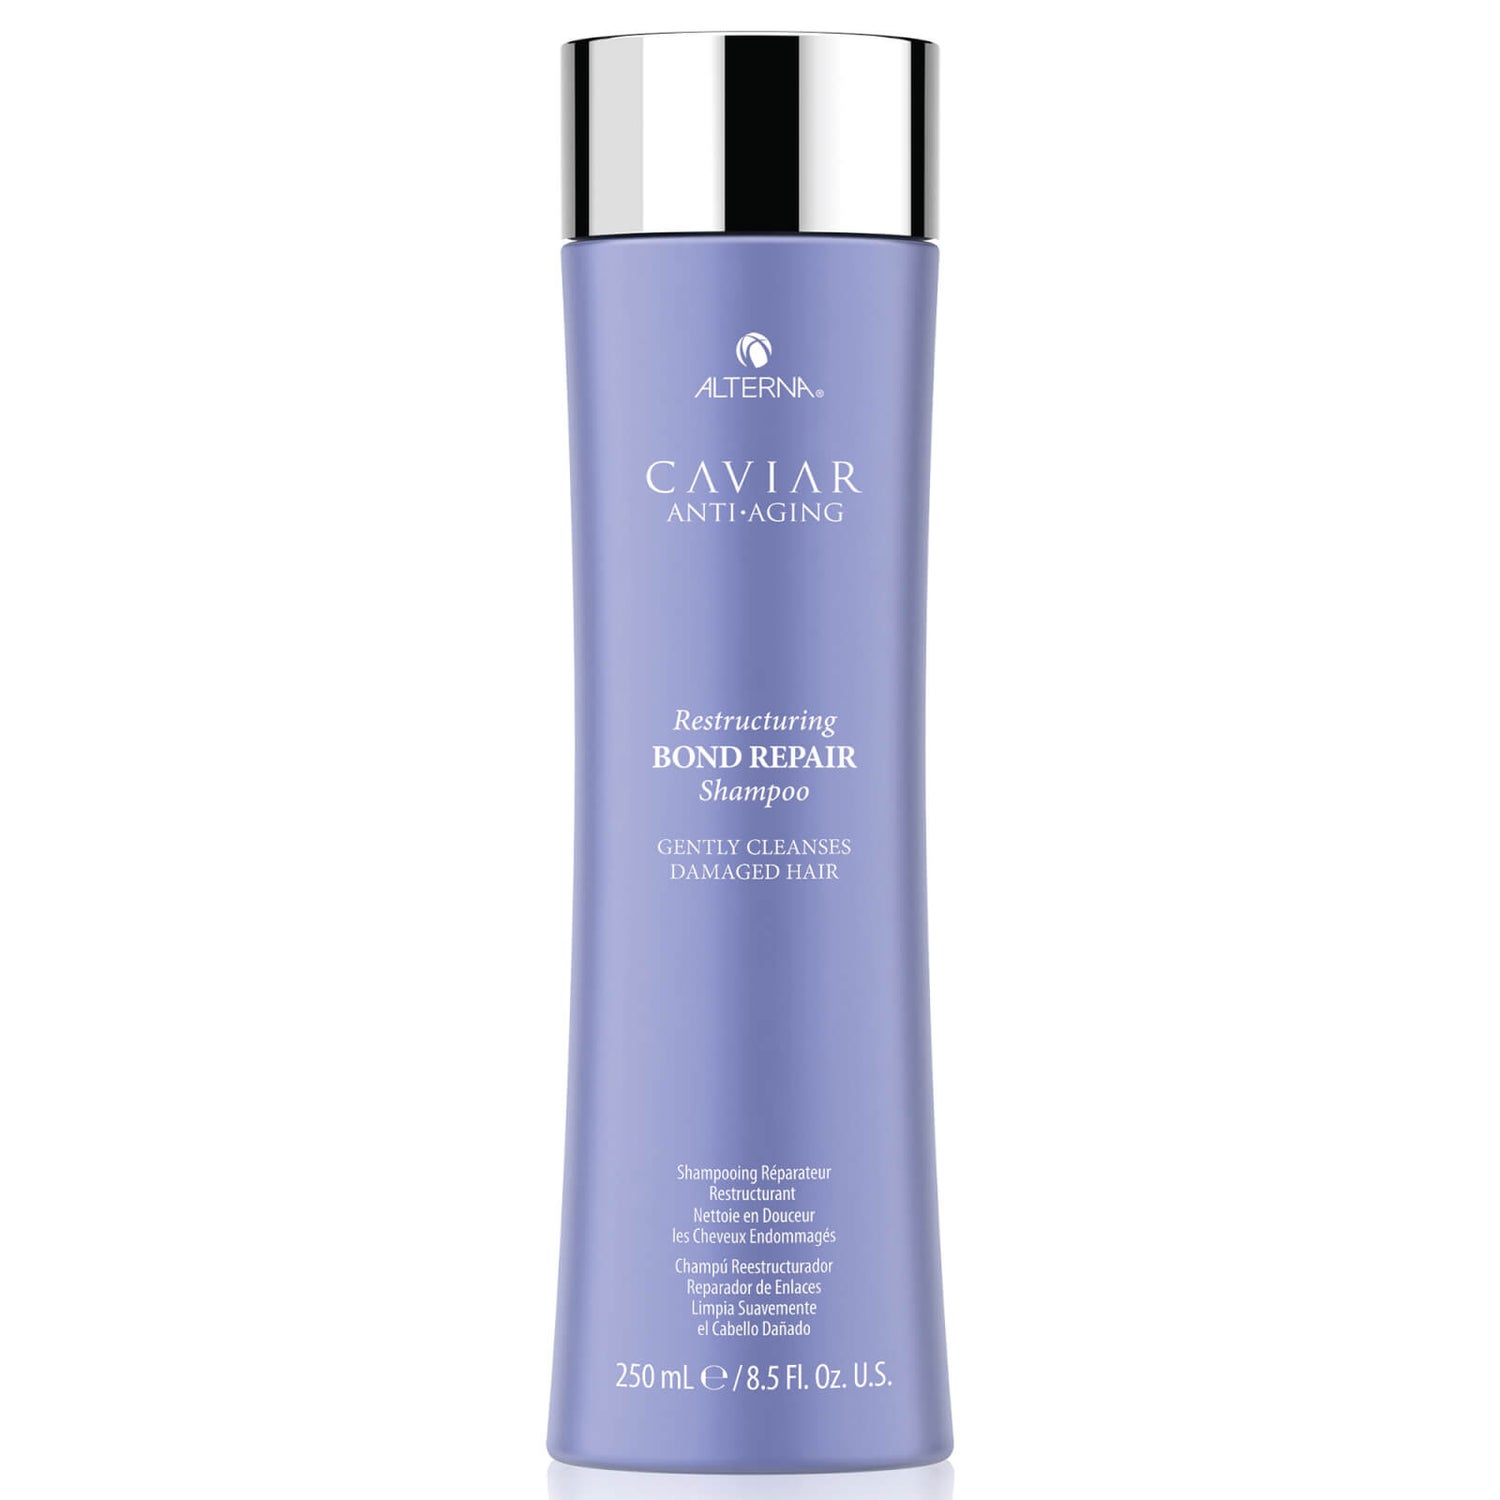 Alterna Caviar Anti-Ageing Restructuring Bond Repair Shampoo